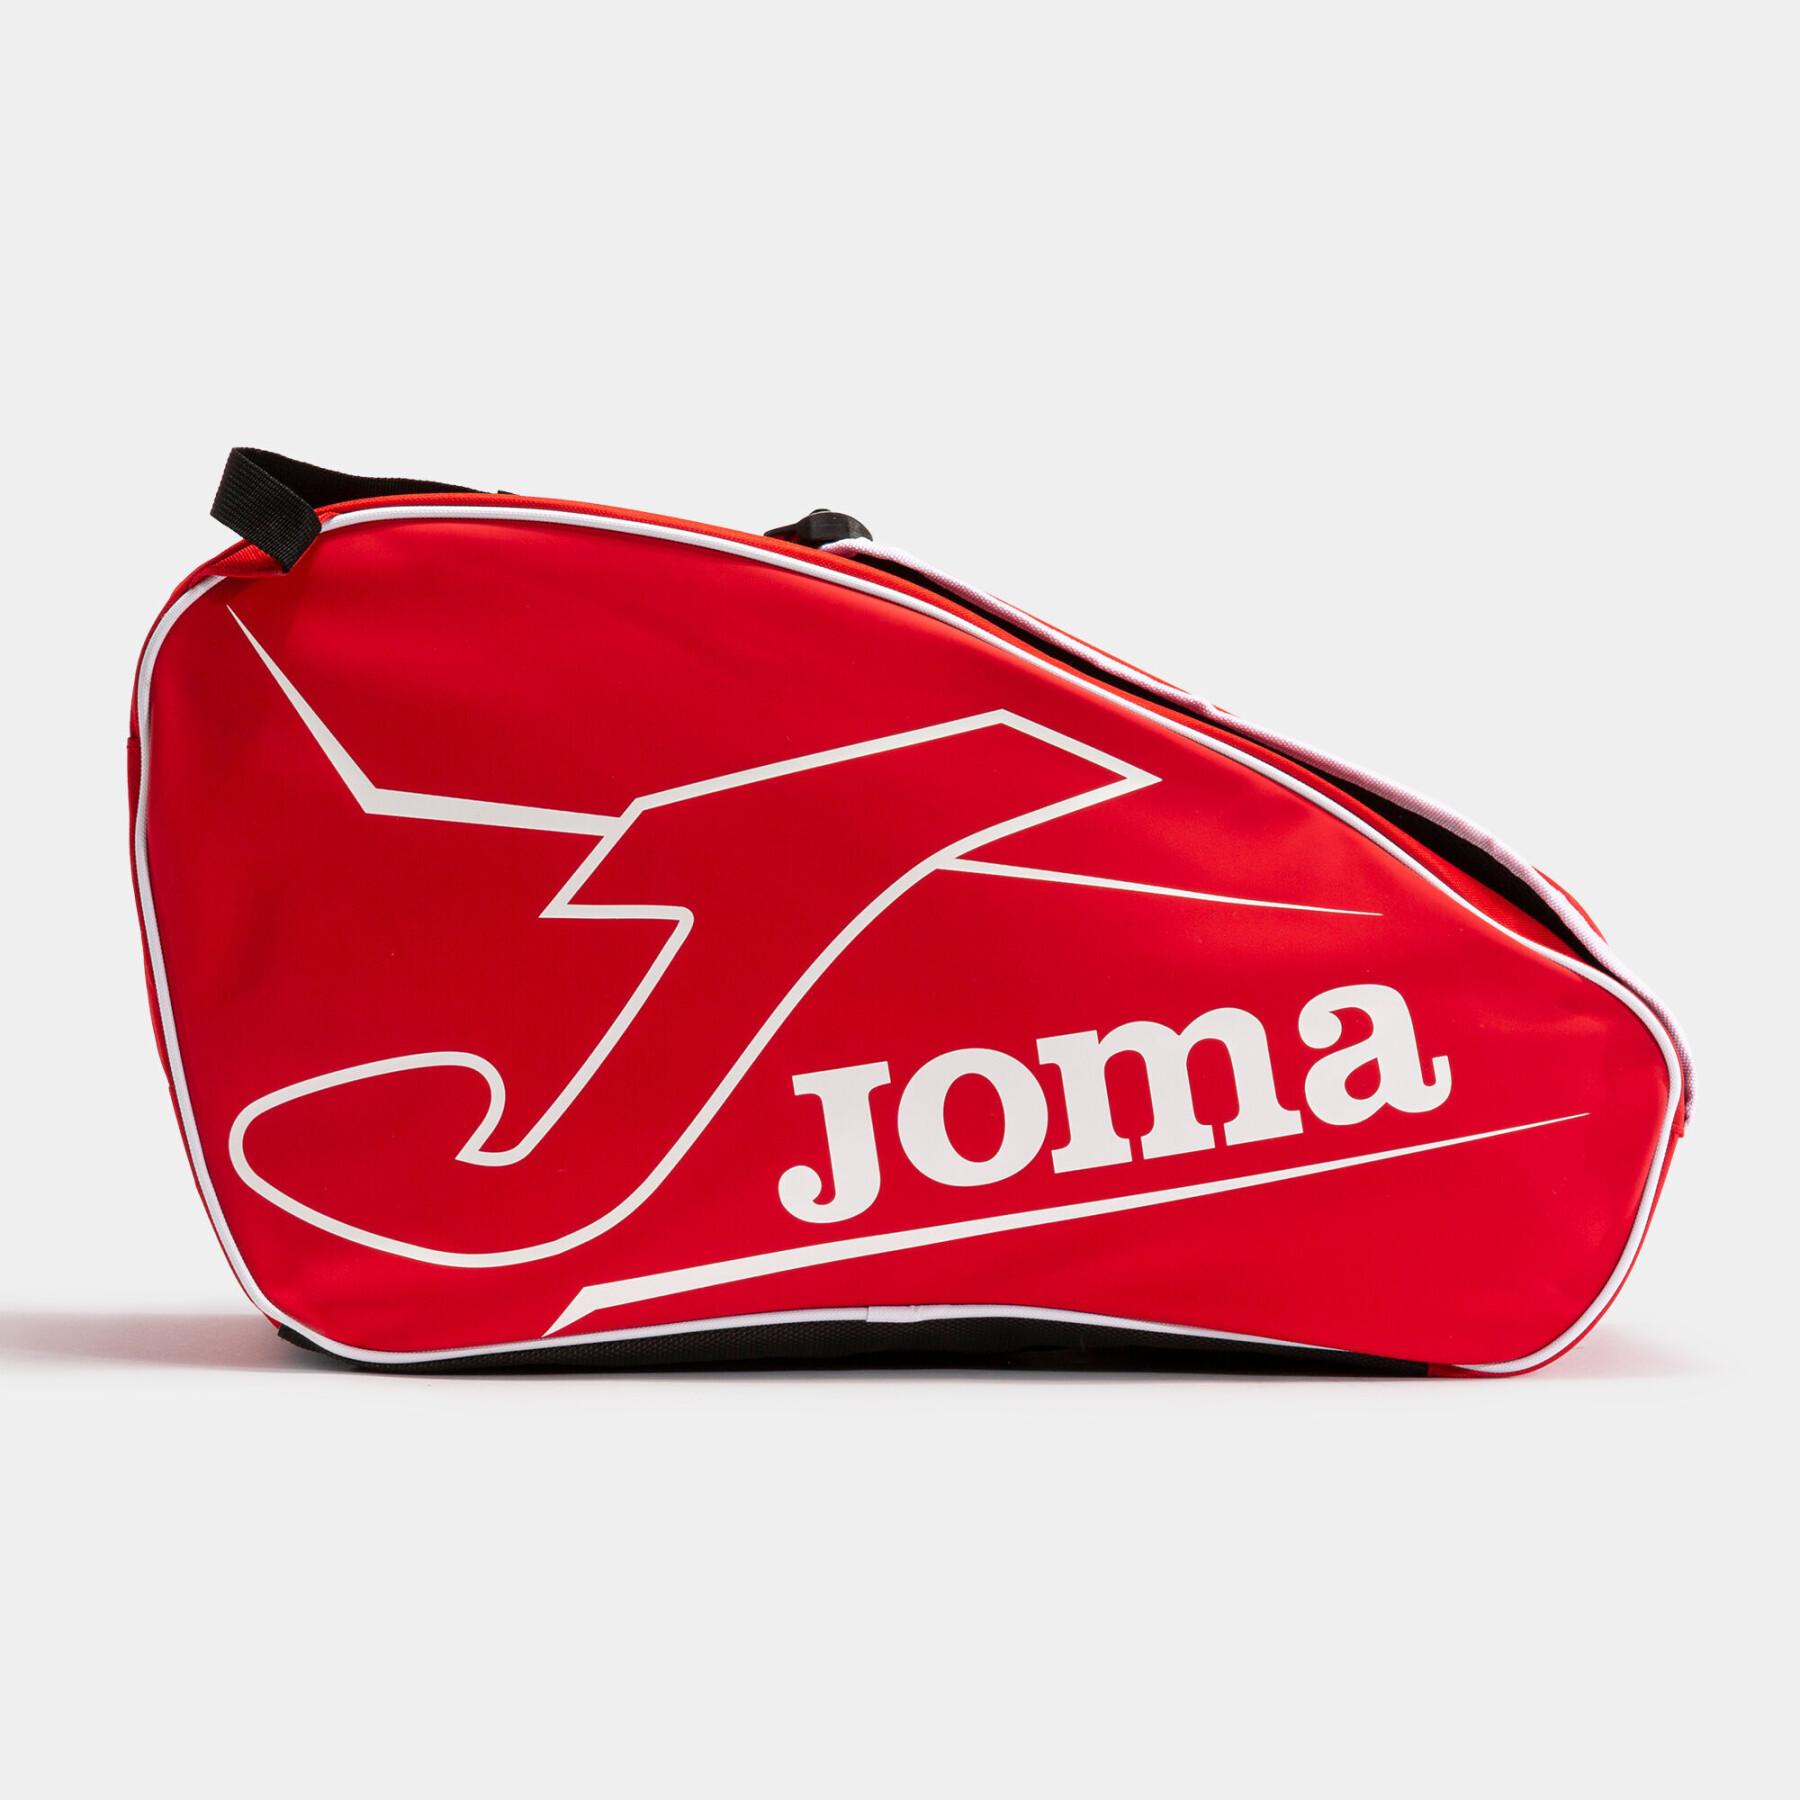 Padel racket bag Joma Gold Pro